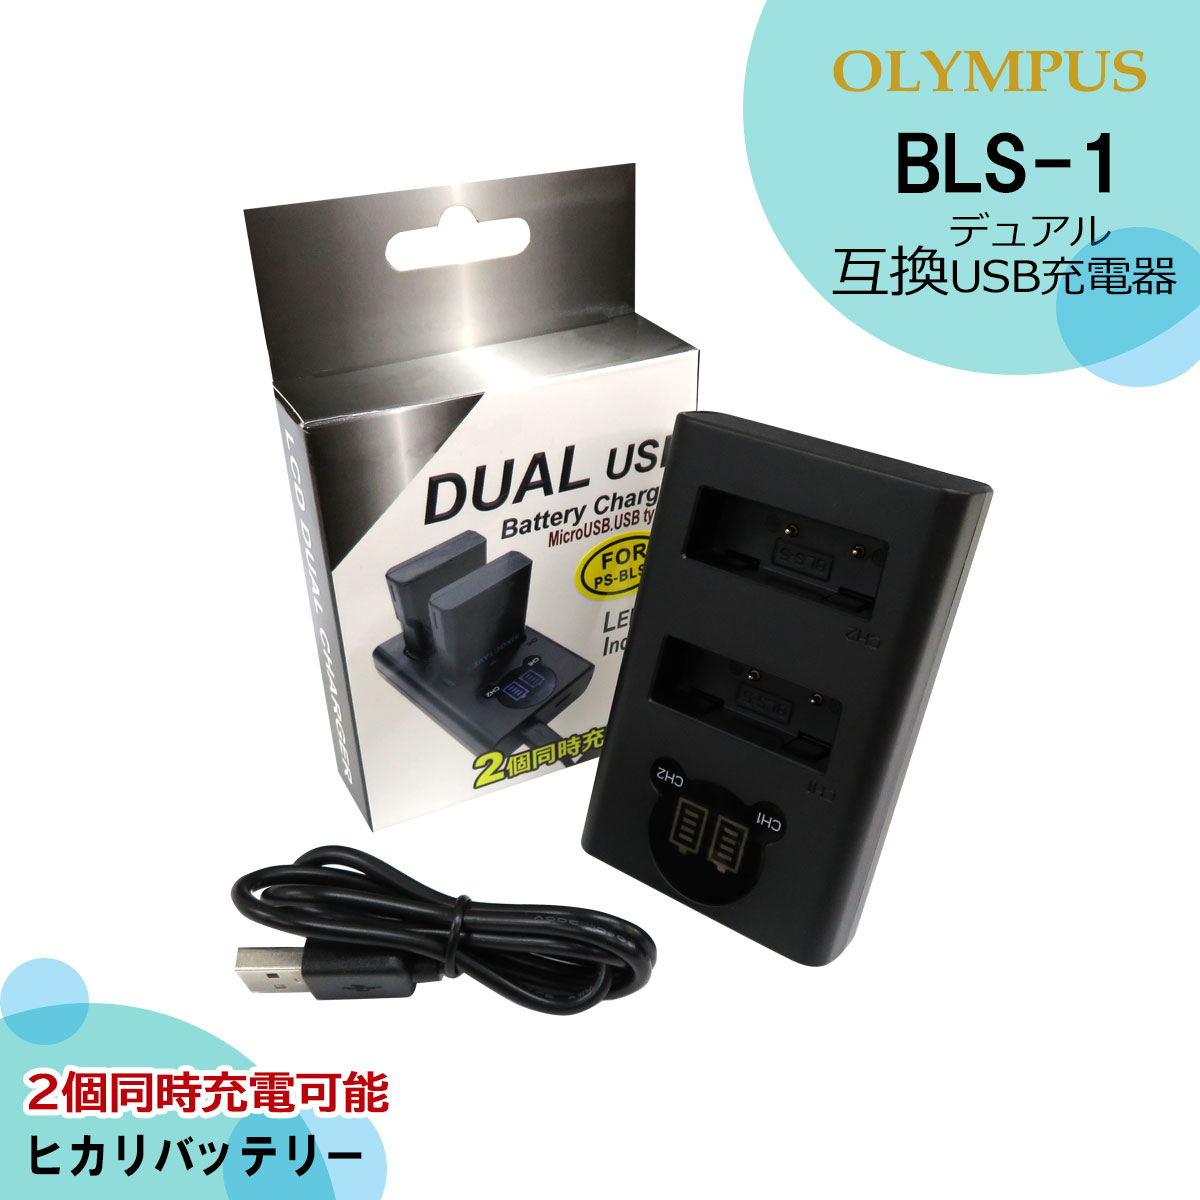 BLS-1　【あす楽対応】オリンパス 互換USBチャージャー デュアル BCS-1 / BCS-5 （2個同時充電可能）E-420 / E-620/ E-PL1 / E-P1 / E-P2 / E-P3 / E-PL3 / E-PM1 / E-PL1s / E-PL2 / E-PL5 / E-PM2/ E-PL6/ E-PL7/ E-M10 / Stylus 1 / olympus stylus 1s